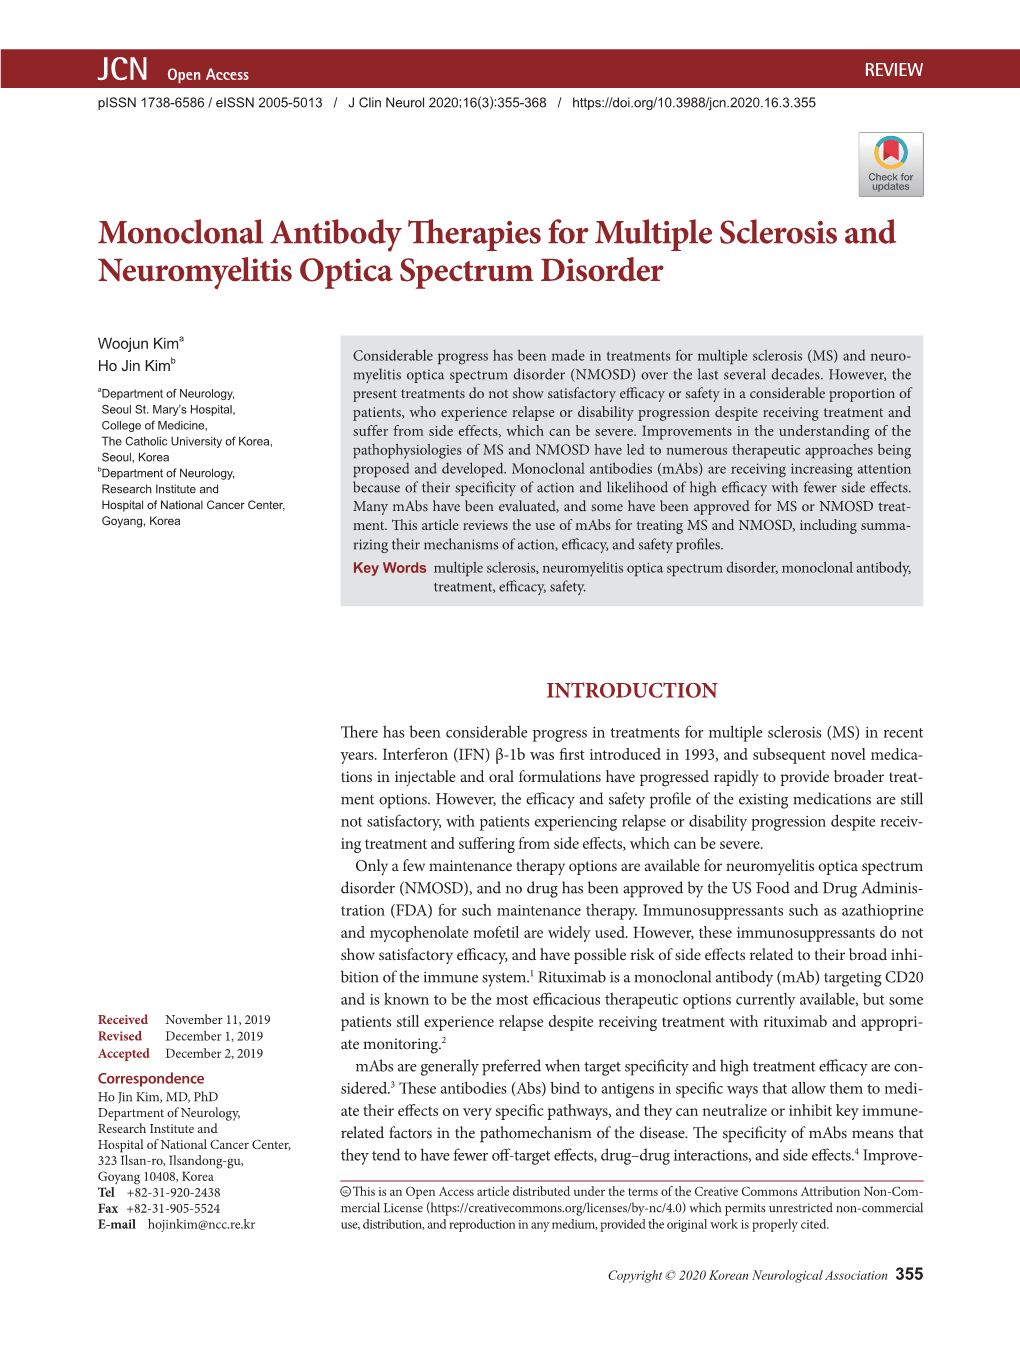 Monoclonal Antibody Therapies for Multiple Sclerosis and Neuromyelitis Optica Spectrum Disorder